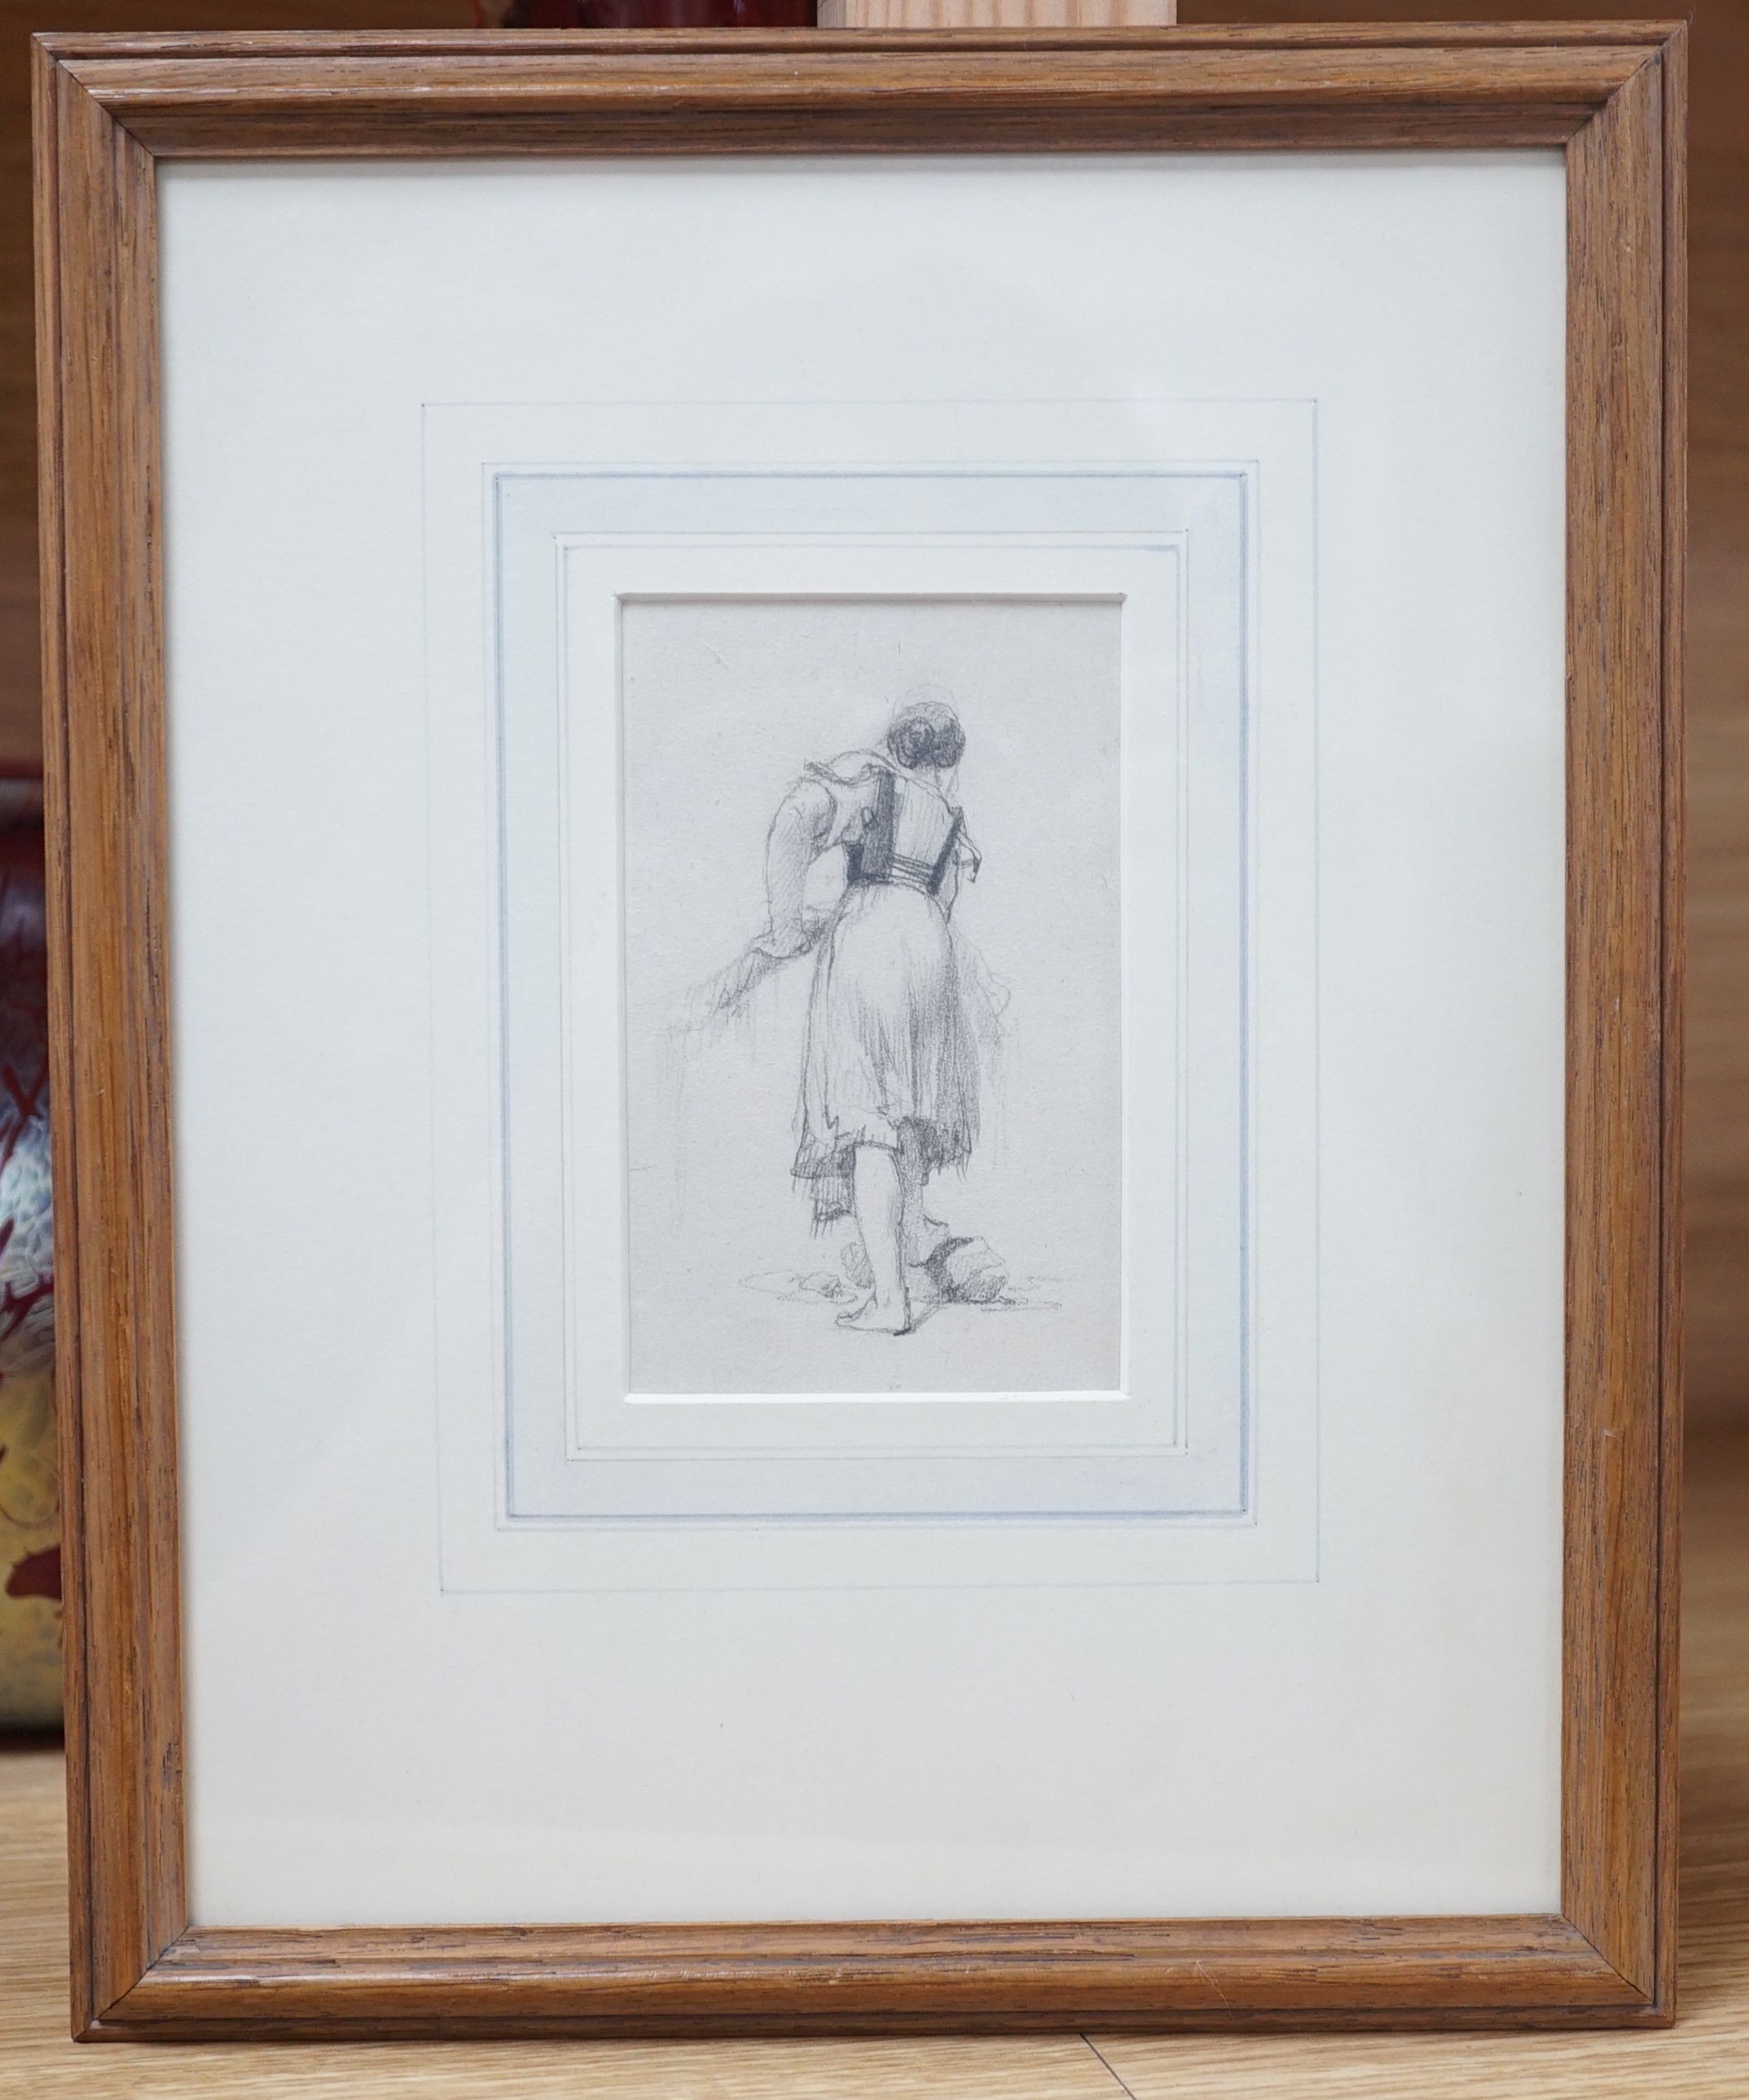 James Baker Pyne (1800-1870), Italian peasant girl, 10 x 6.5cm